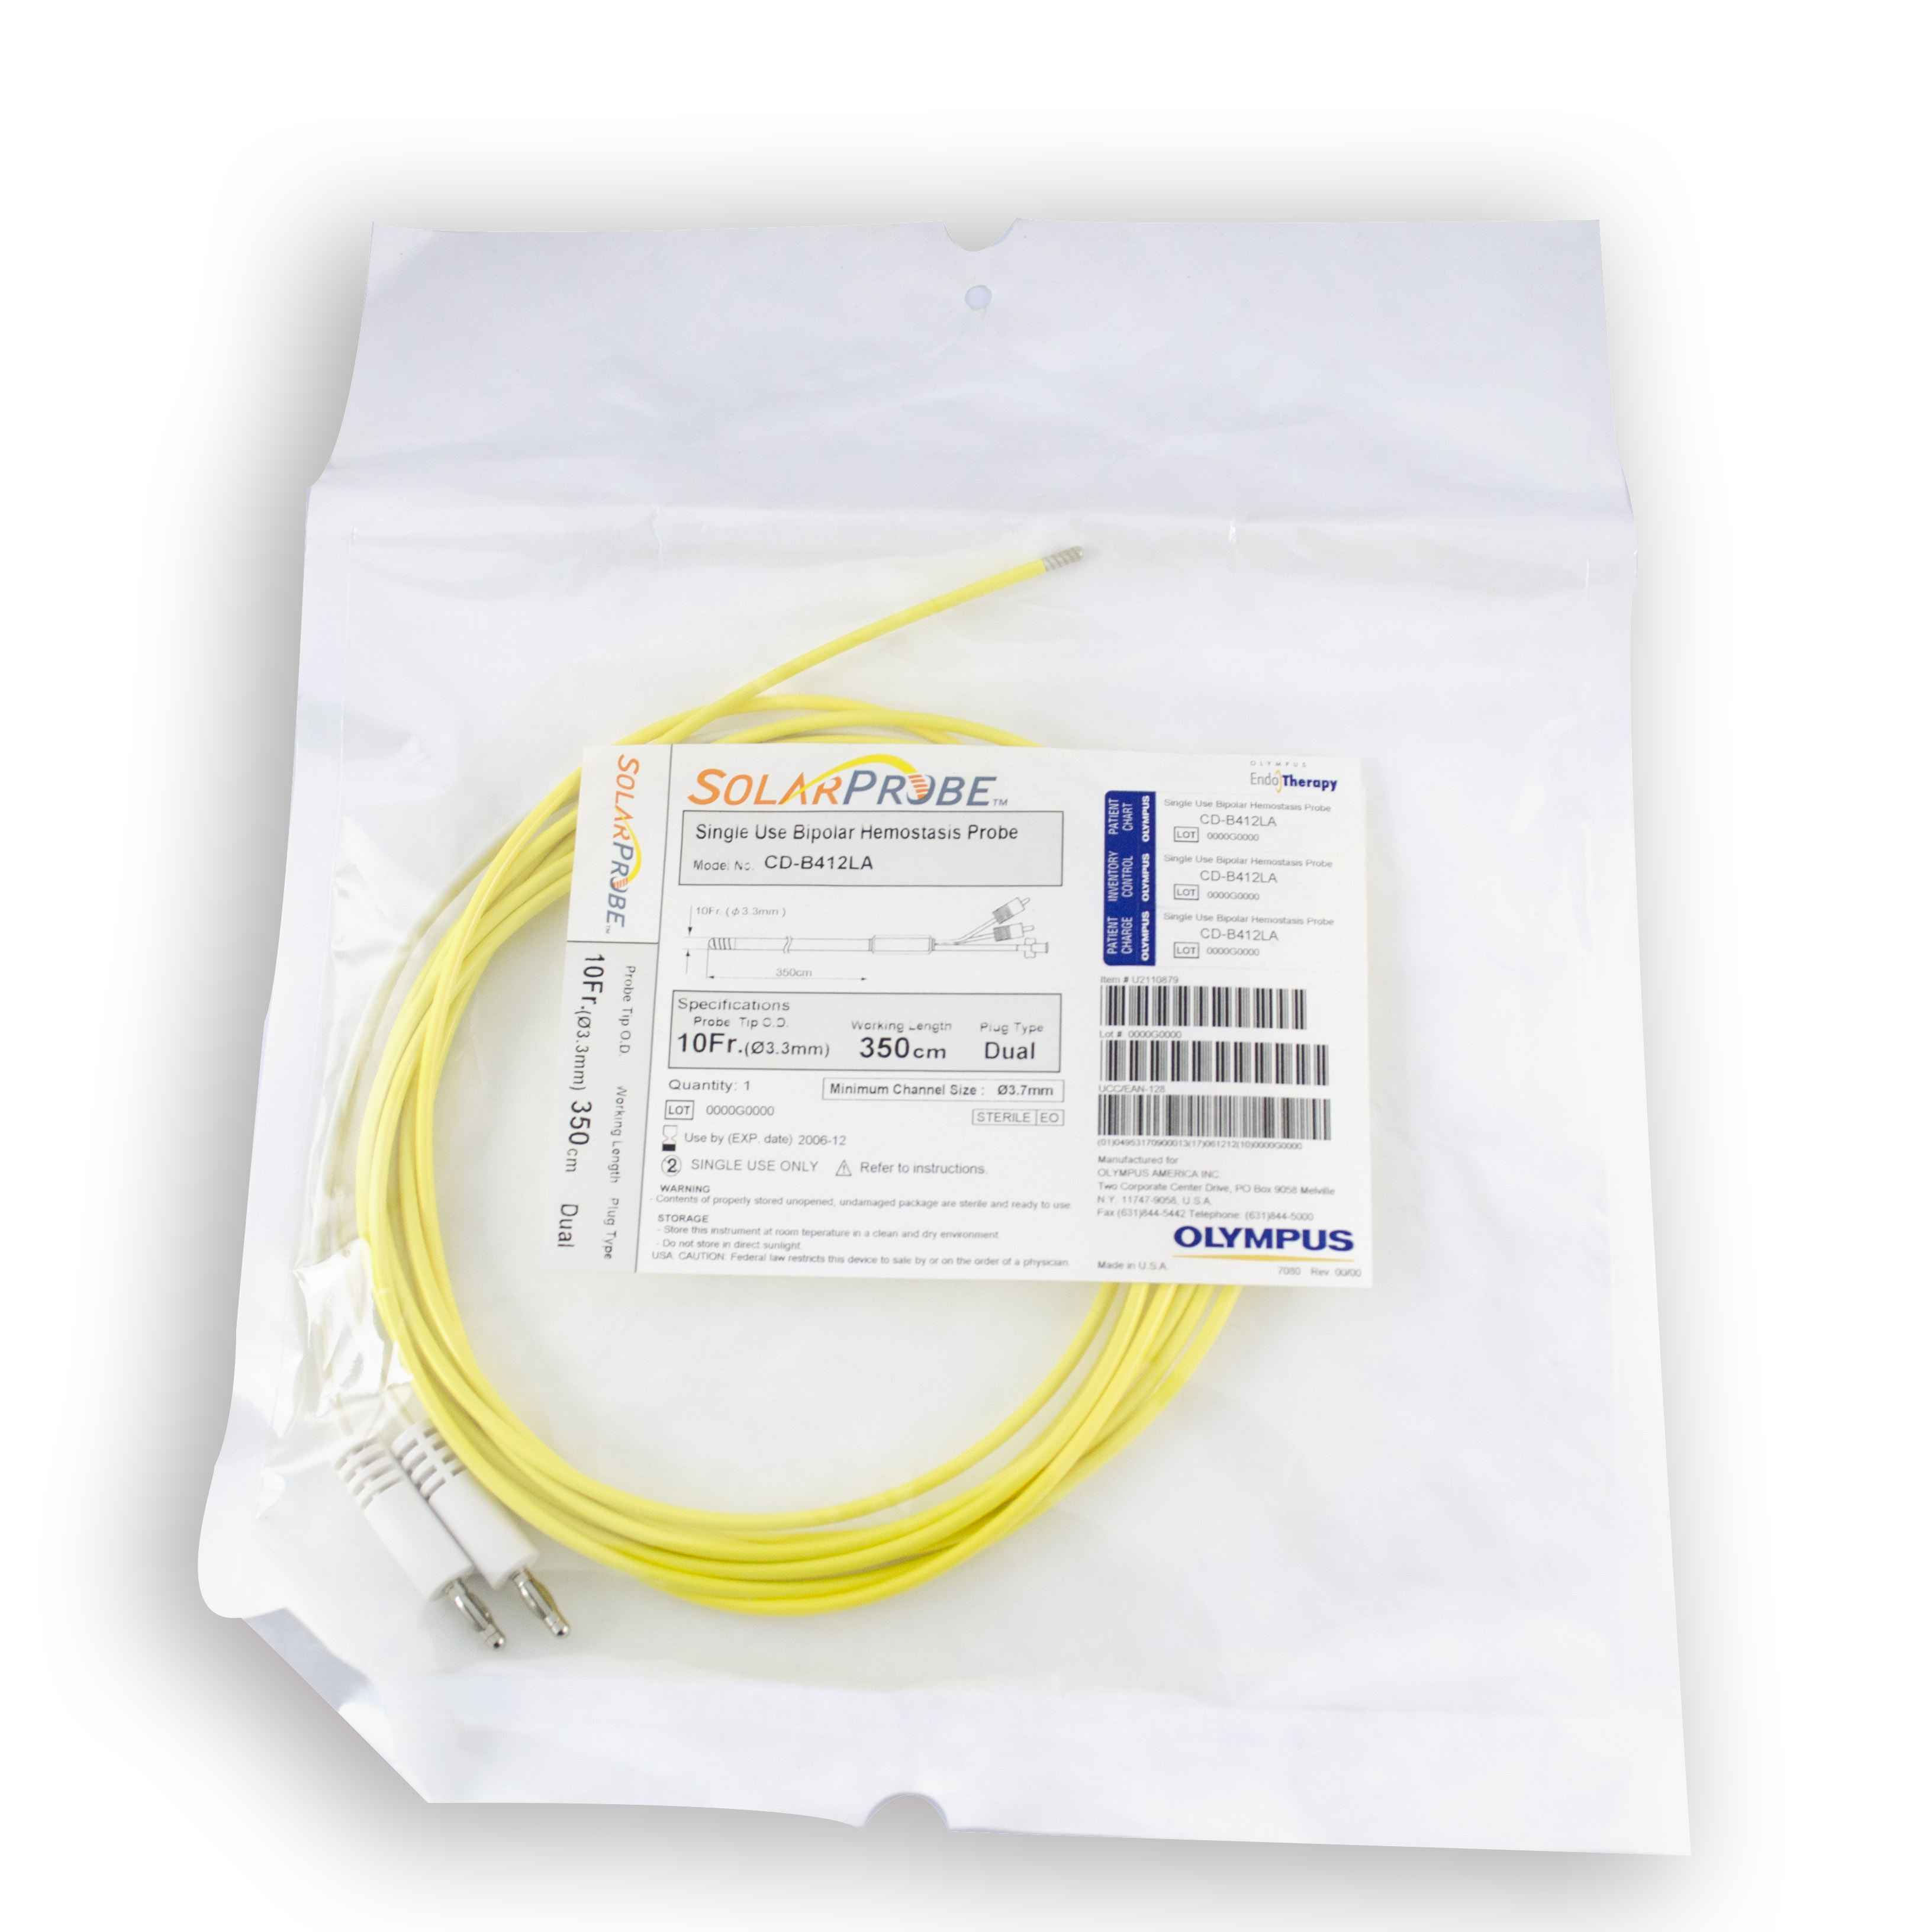 [In-Date] Olympus Disposable Coagulation Electrode (Heat Probe) - CD-B412LA